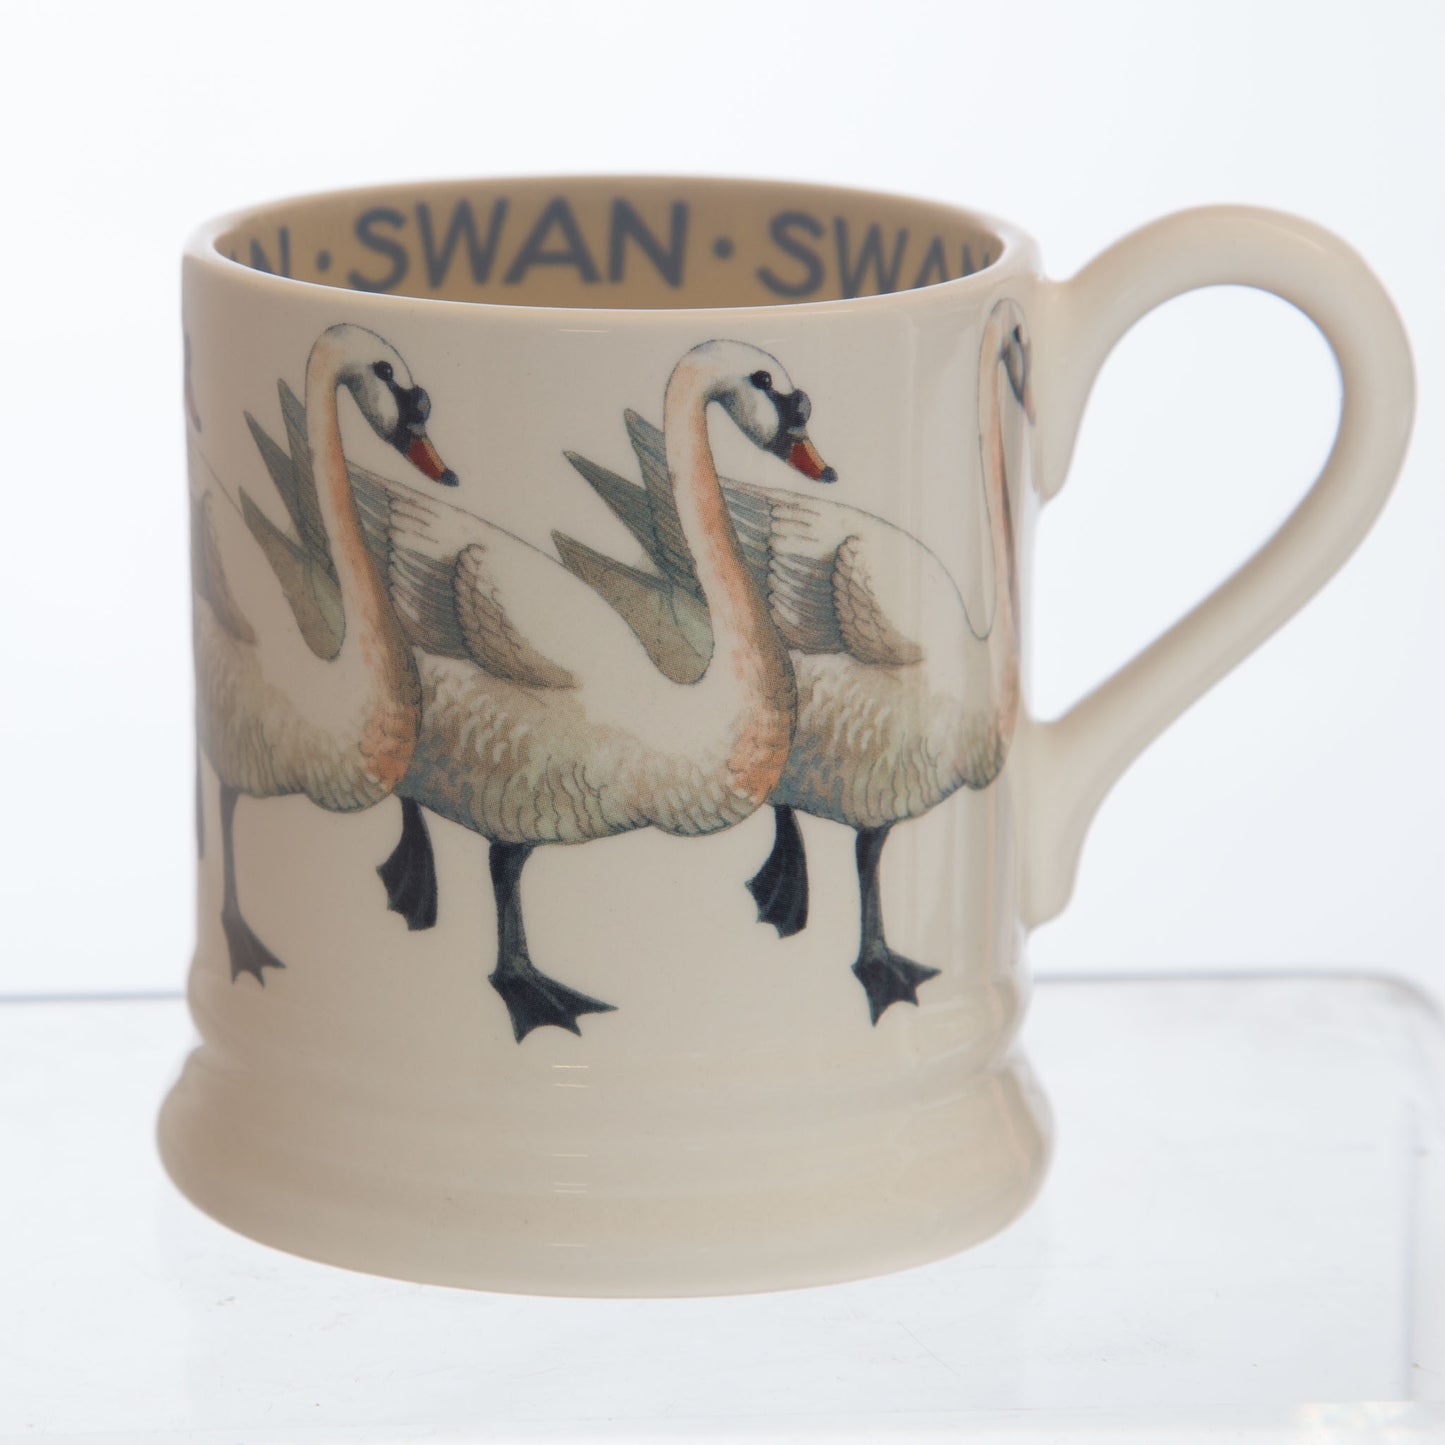 Swan half pint mug from Emma Bridgewater